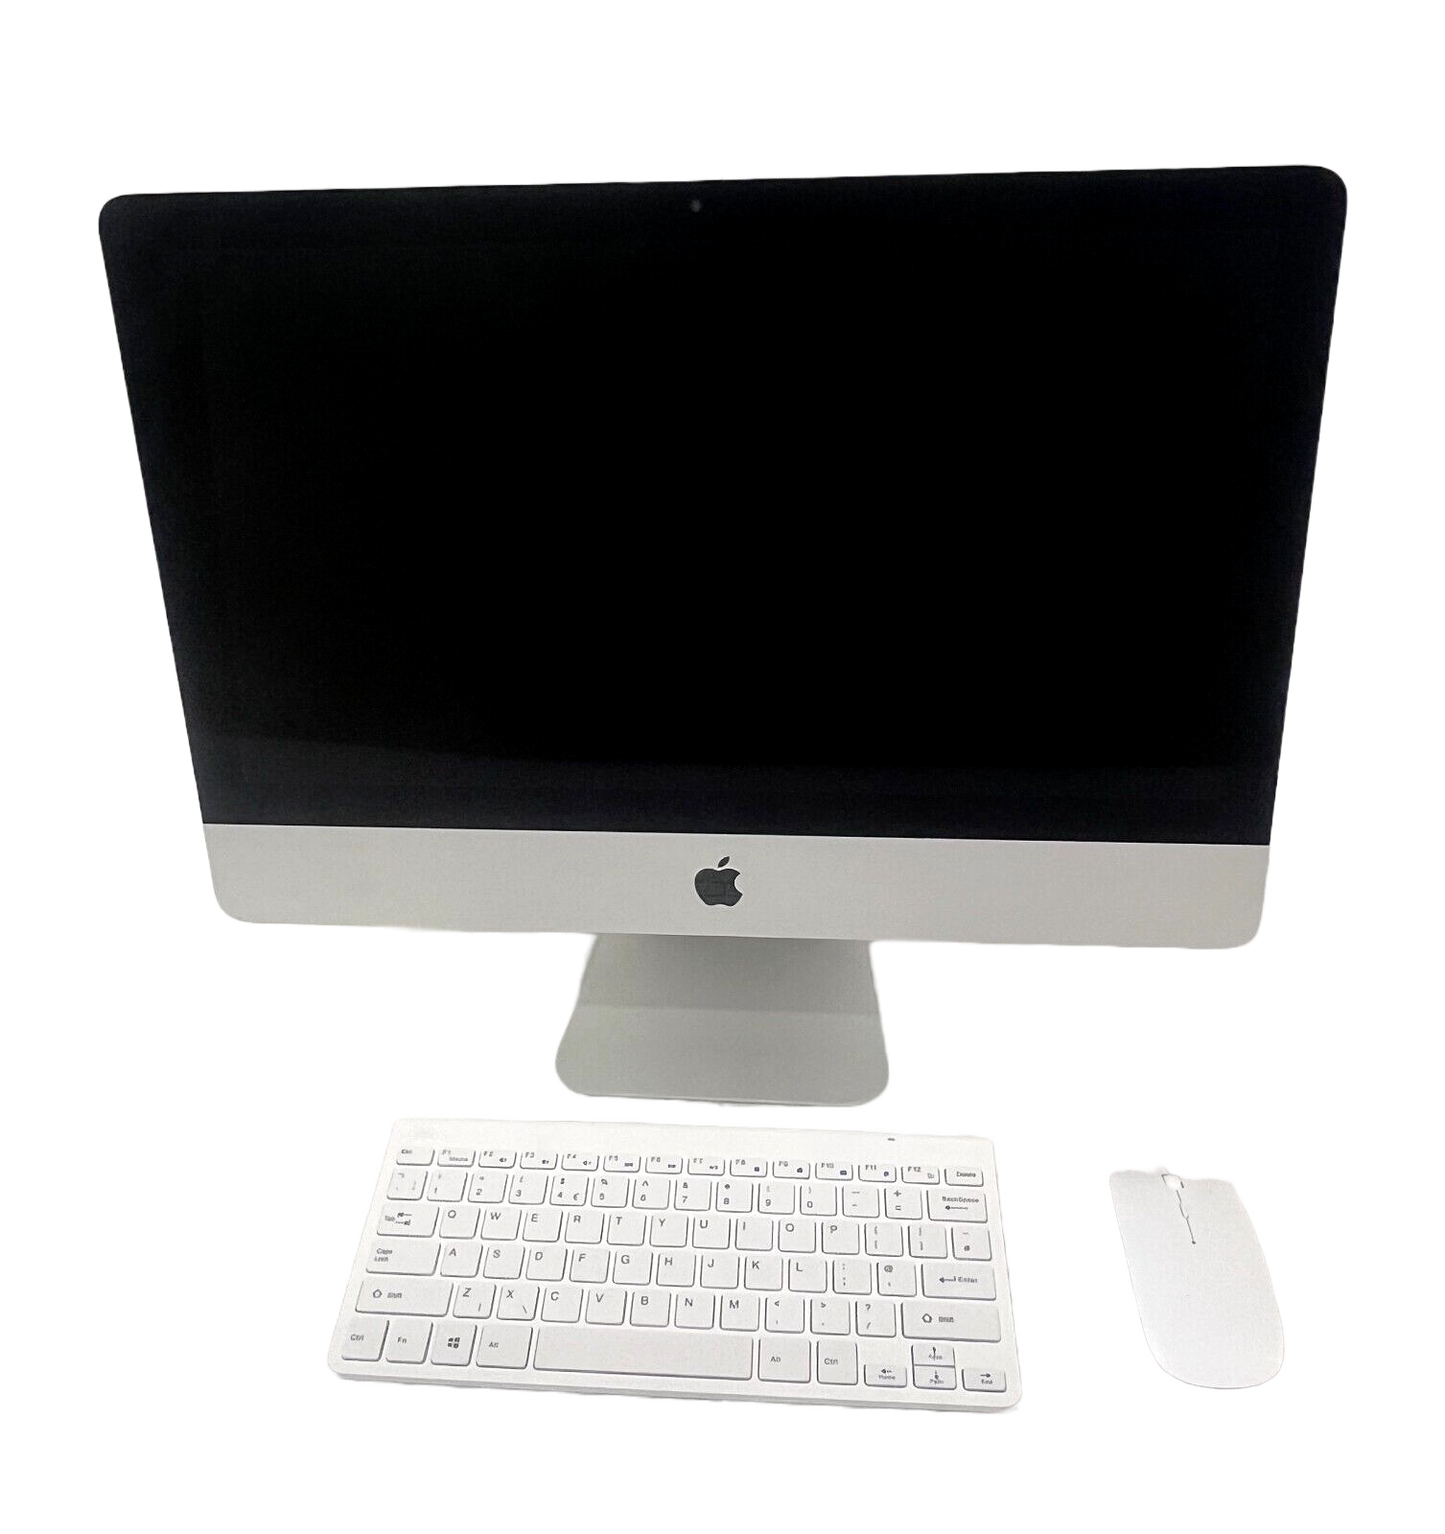 Apple iMac 21.5" Retina 4K 2019 Desktop Computer Core i3 3.6GHz 8GB 1TB HDD GOOD